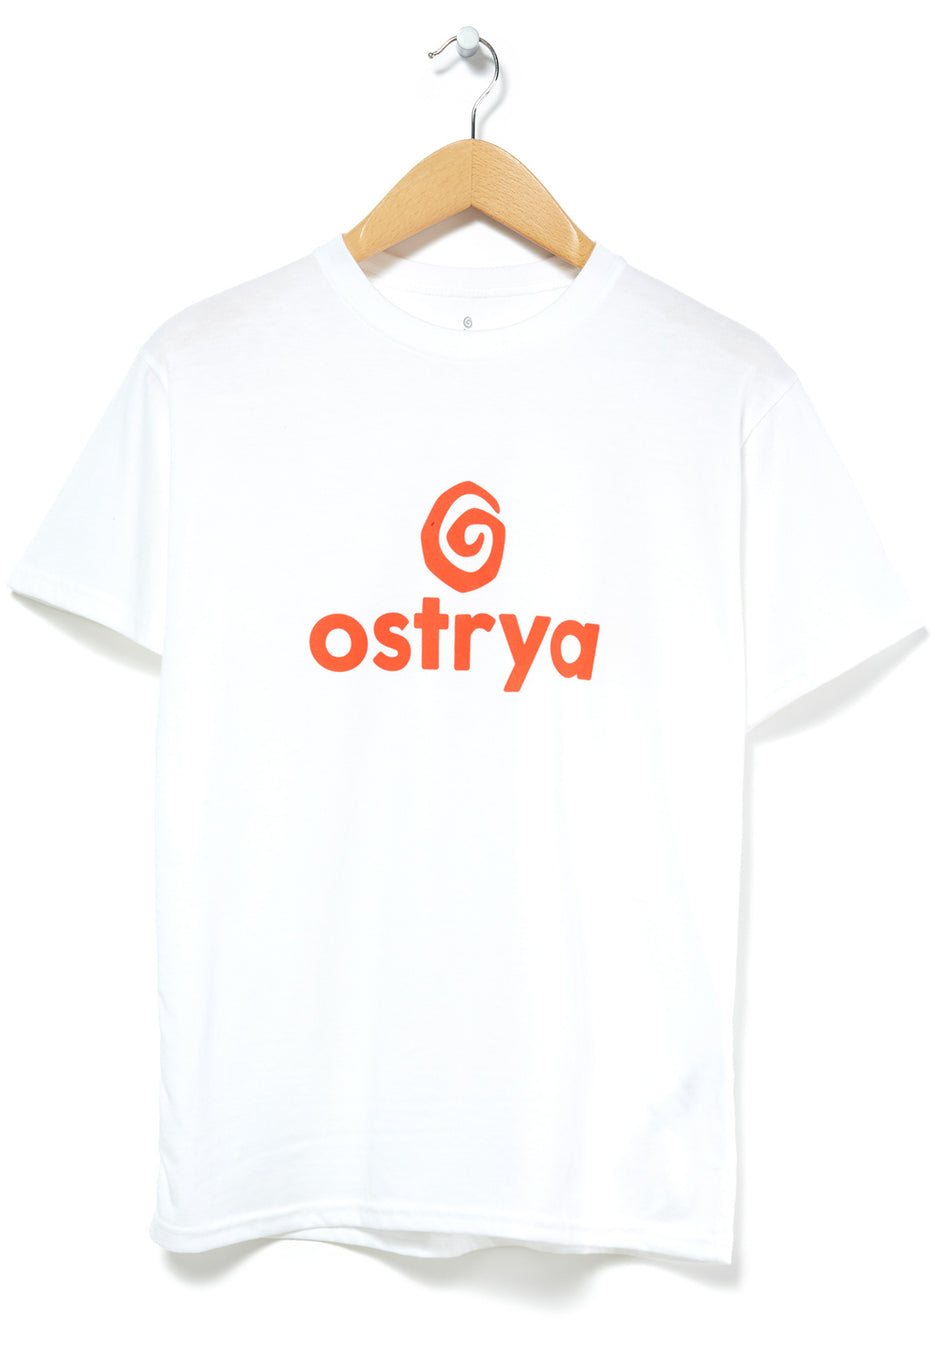 Ostrya Emblem Men's Organic T-Shirt 4